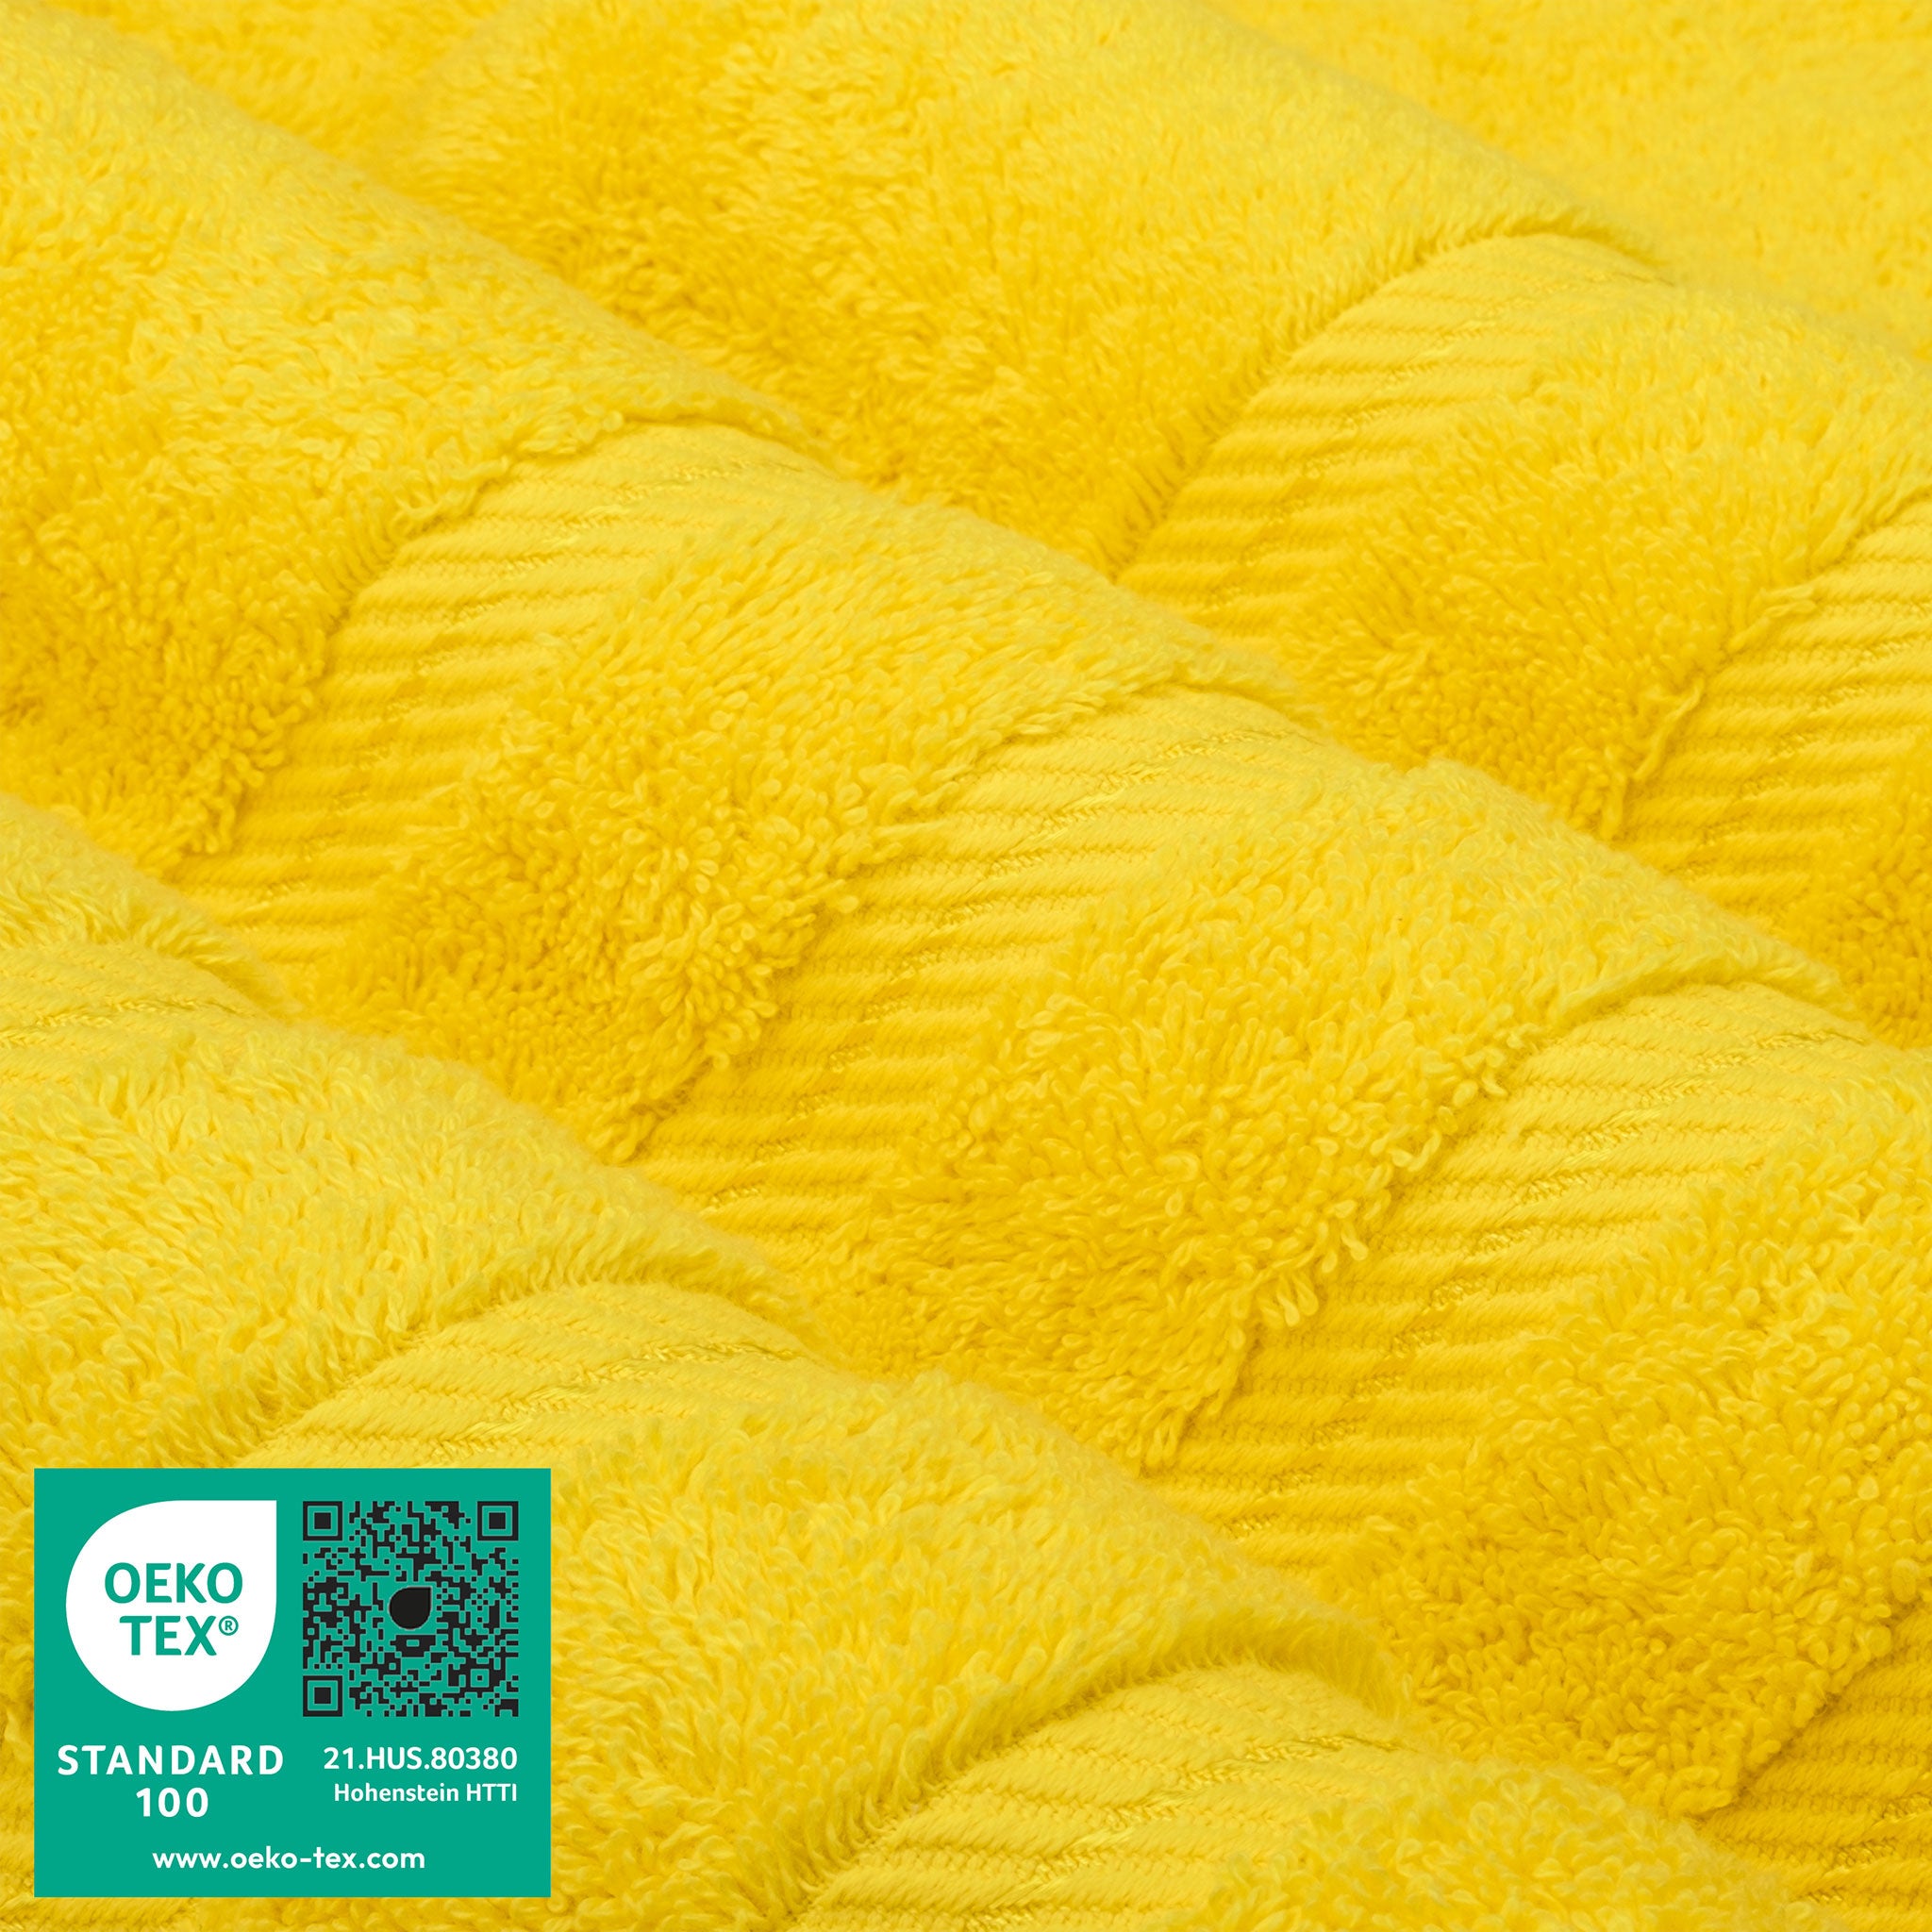 American Soft Linen - Single Piece Turkish Cotton Washcloth Towels - Yellow - 3